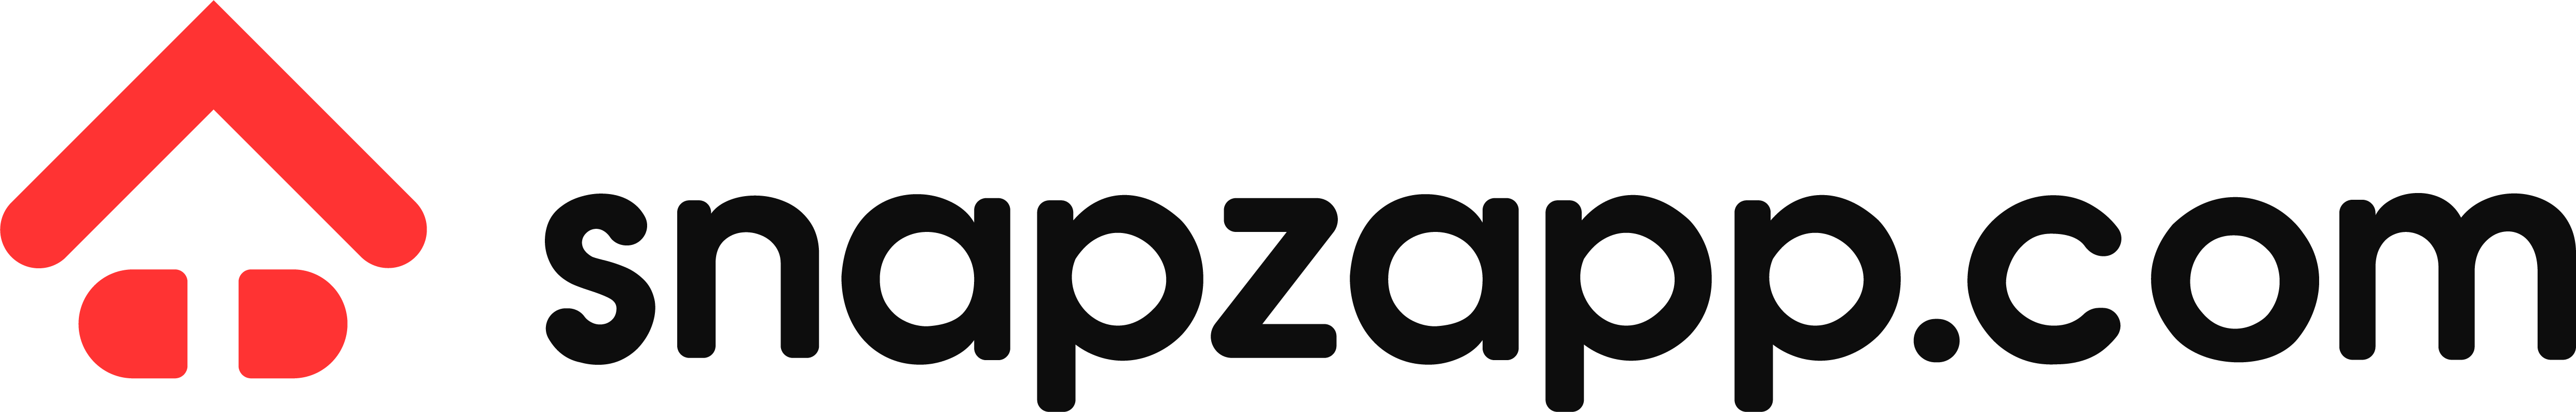 snapzapp-logo